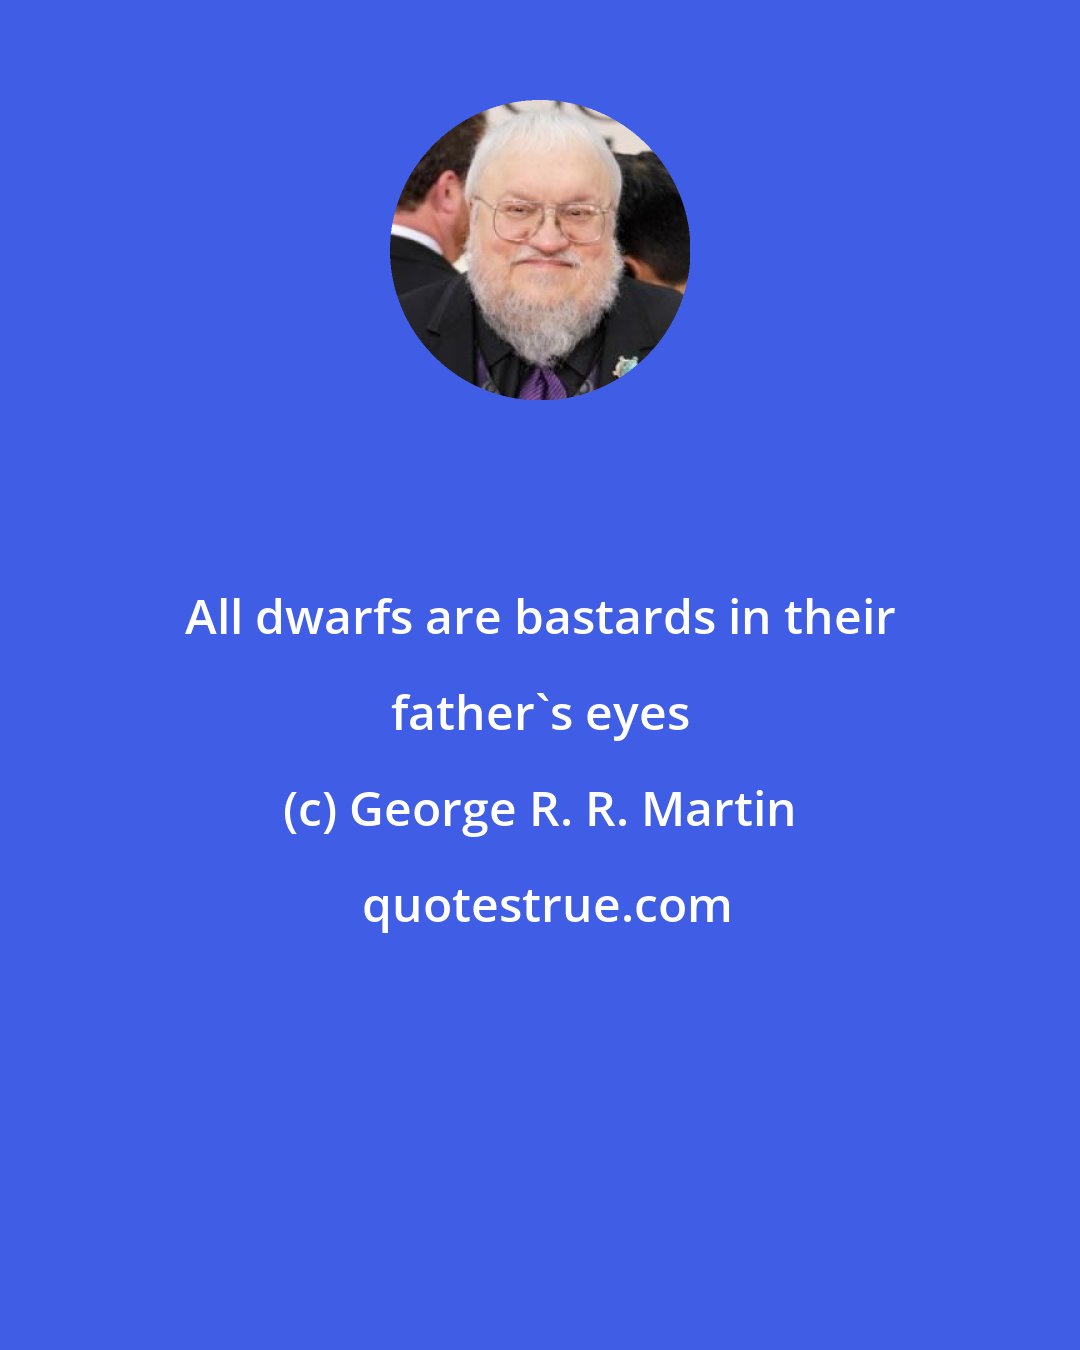 George R. R. Martin: All dwarfs are bastards in their father's eyes